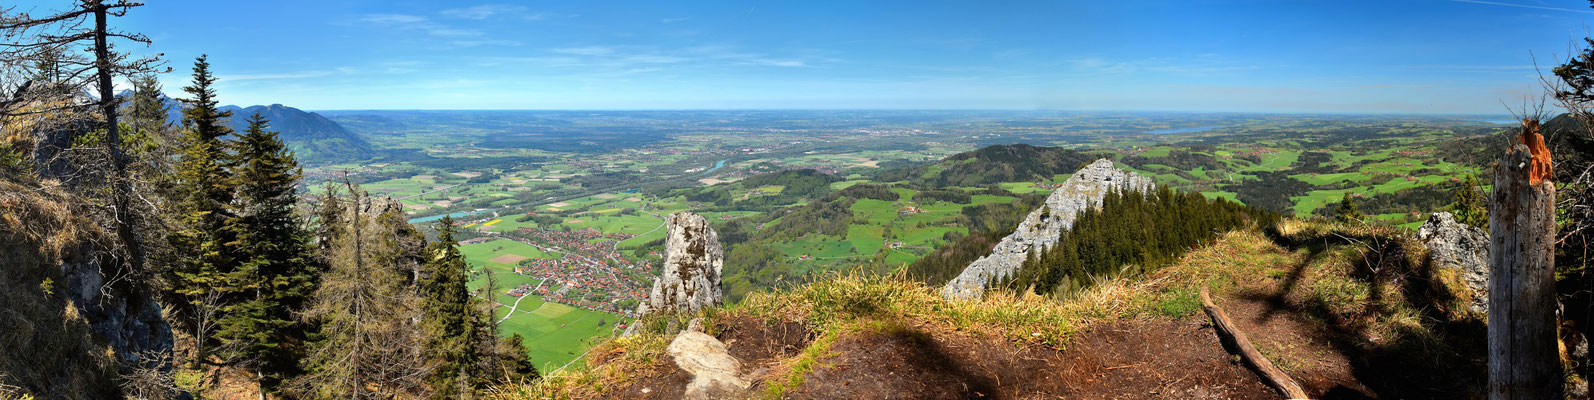 Panorama - Drohnenfoto - Landschaft - Bayern - Berge - Alpen - Sommer - Ausflug - Wanderung - Heuberg